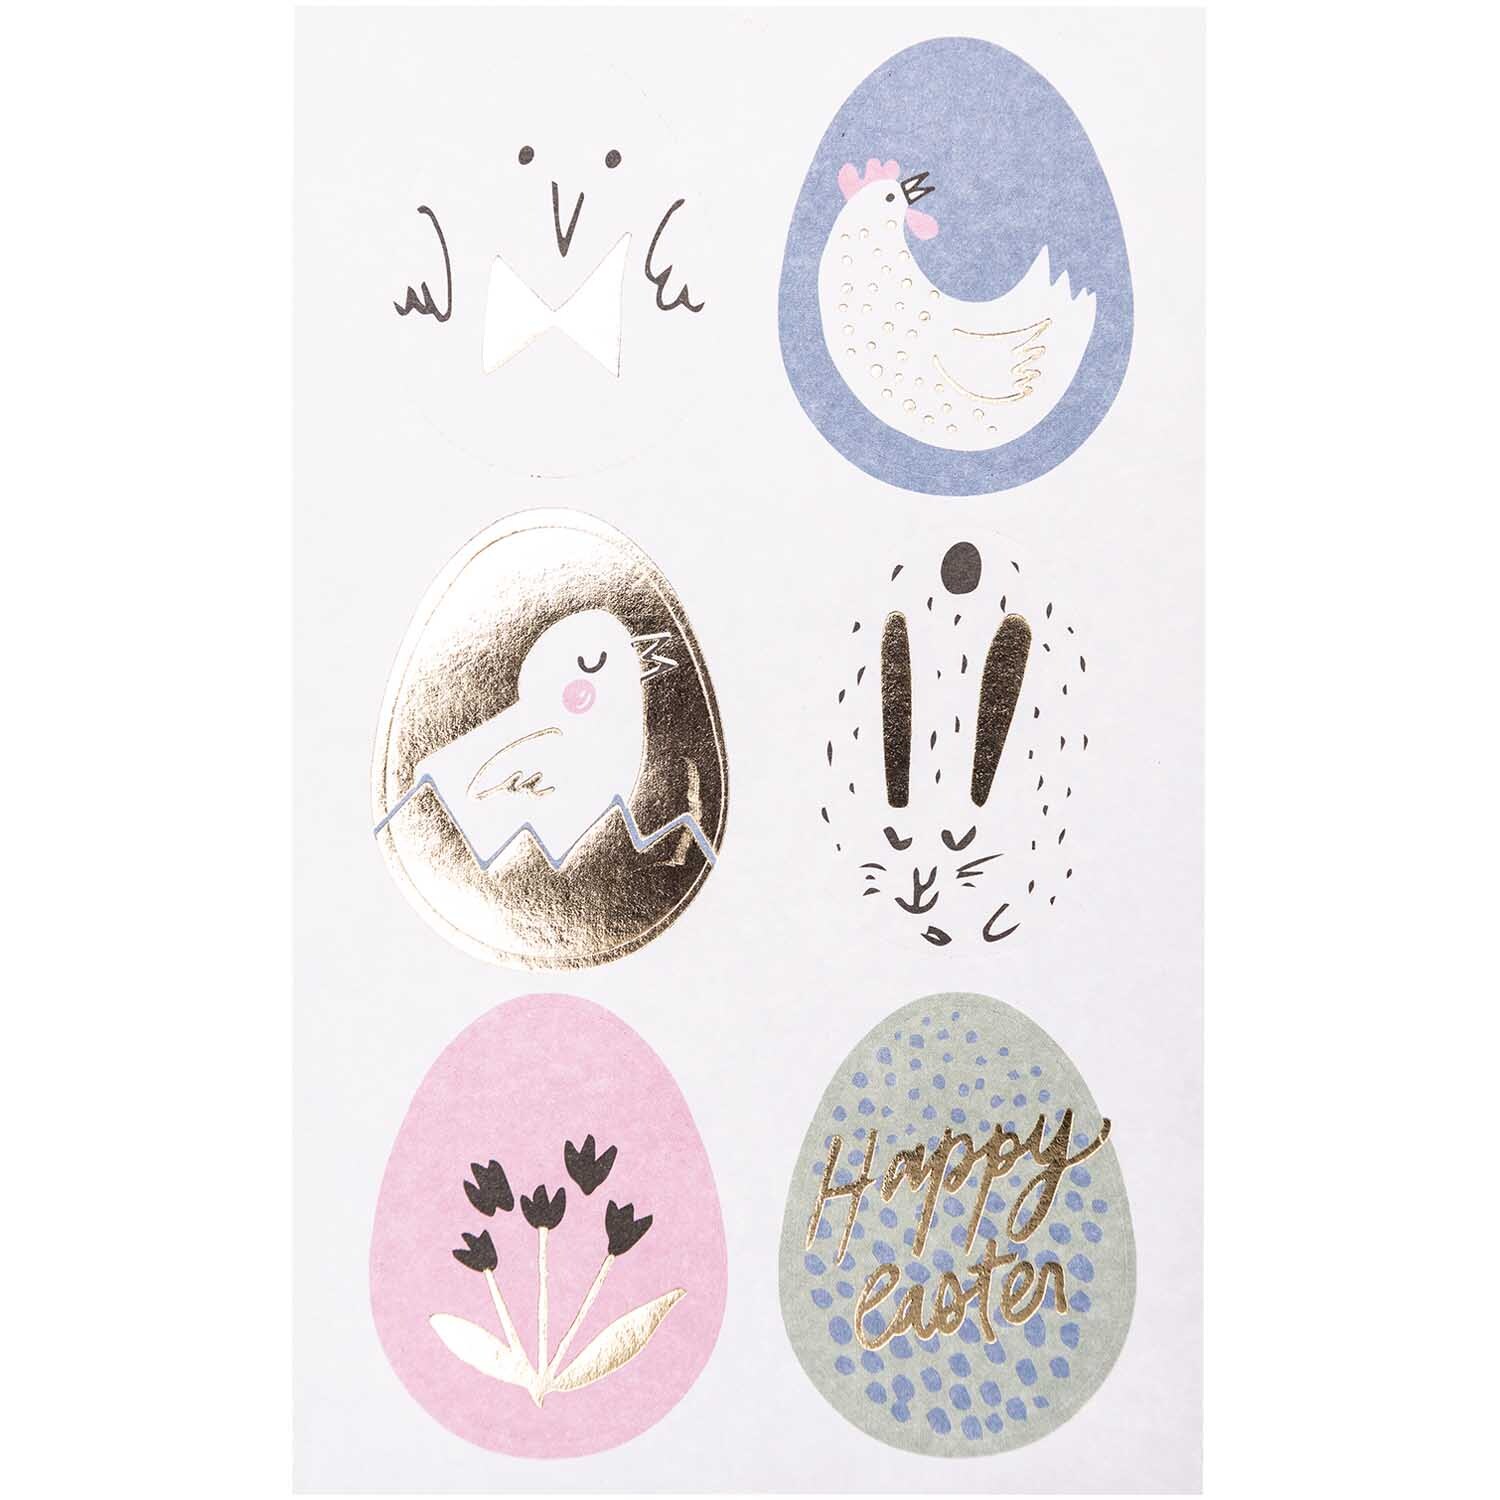 Paper Poetry Sticker Bunny Hop Ostereier 24 Stück